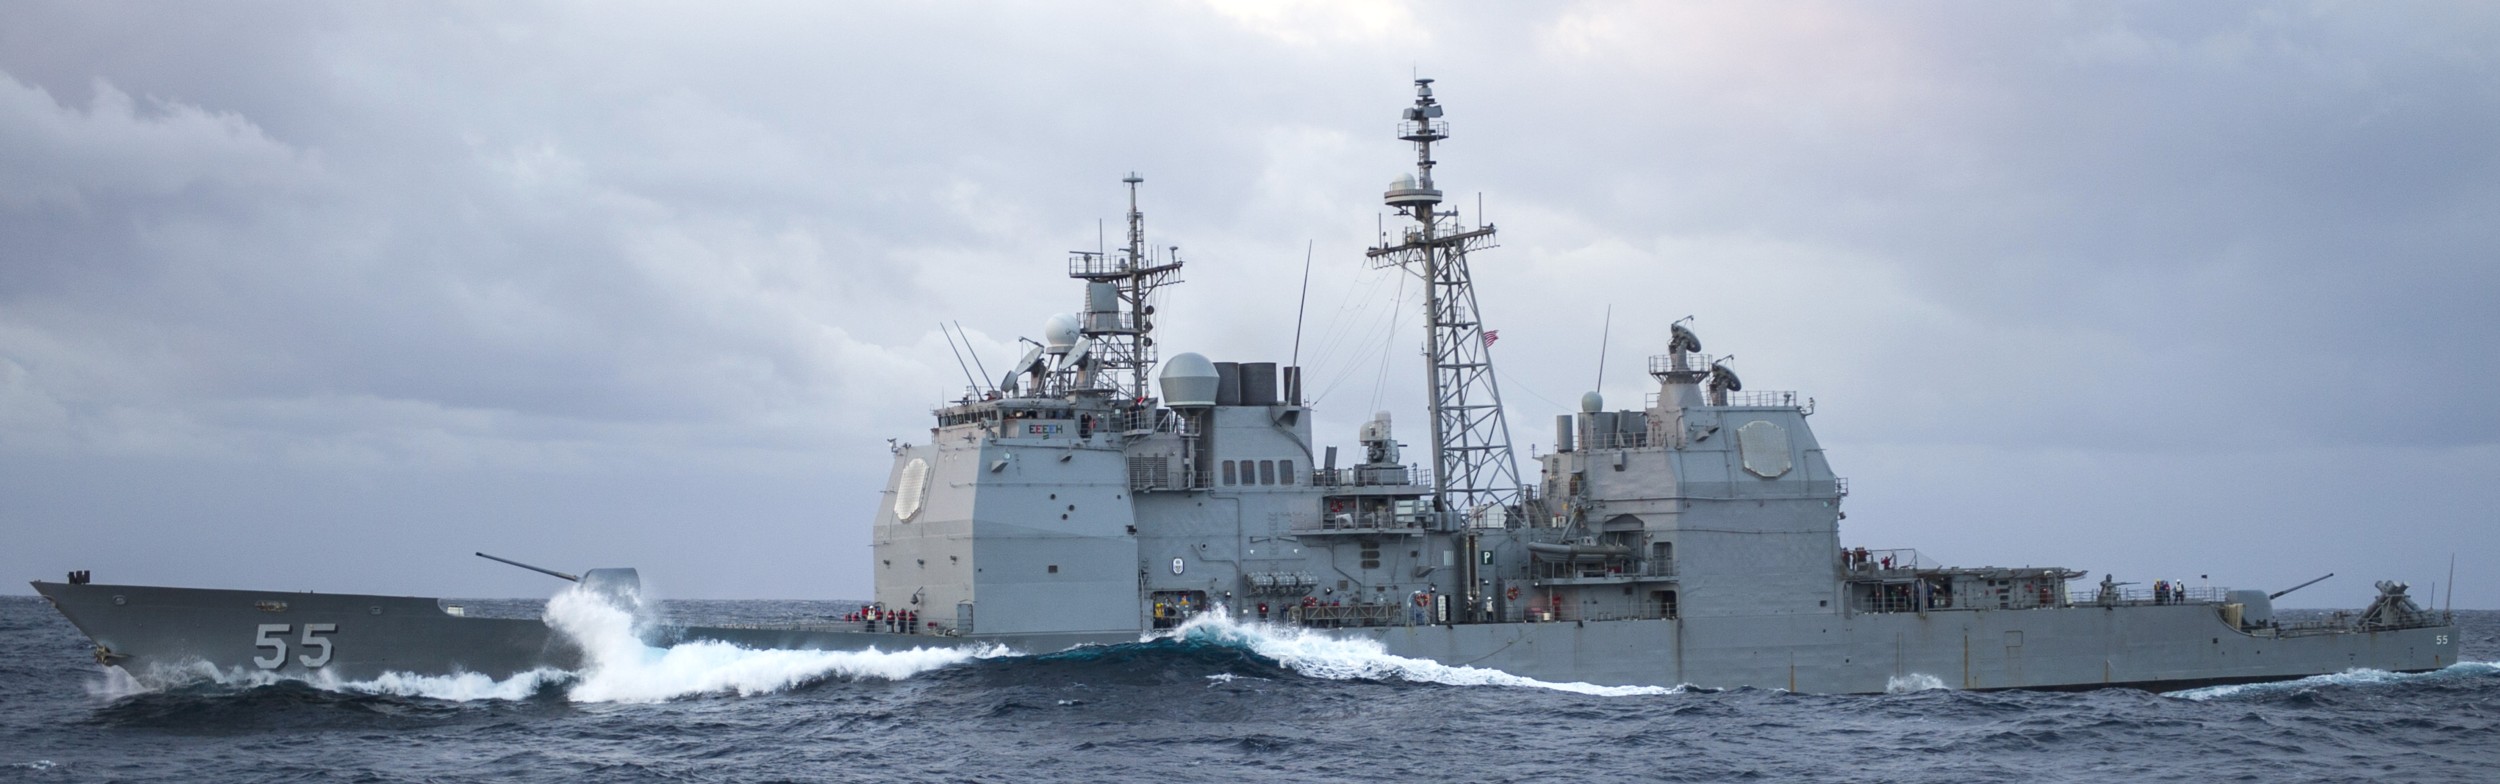 cg-55 uss leyte gulf ticonderoga class guided missile cruiser aegis us navy 42